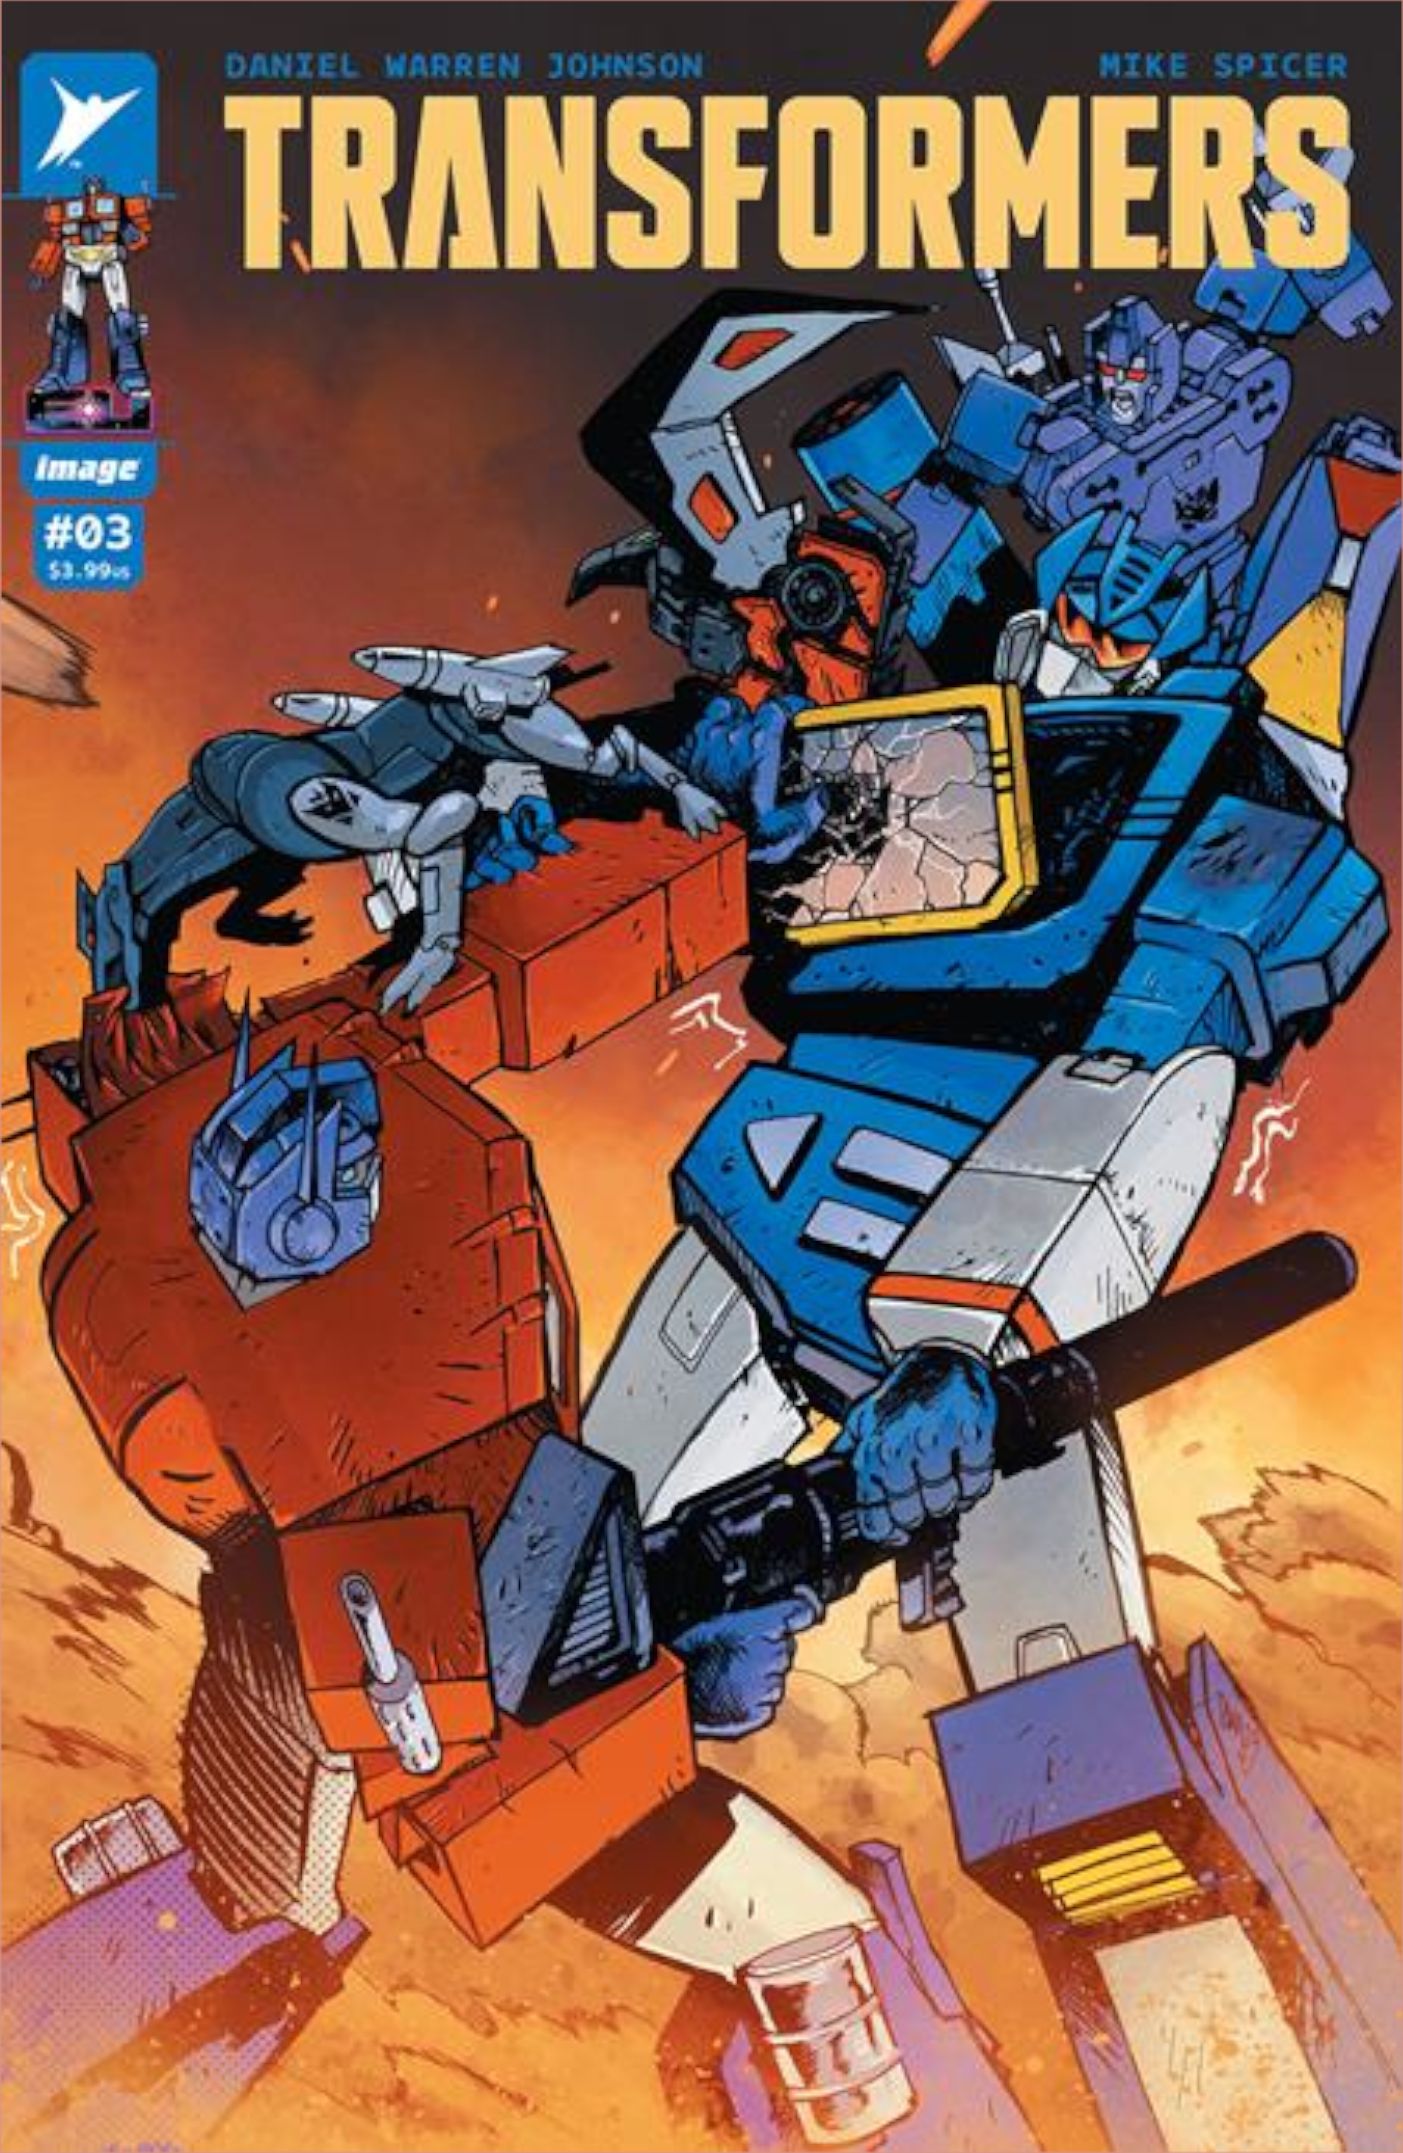 Portada de Transformers #3 por Daniel Warren Johnson